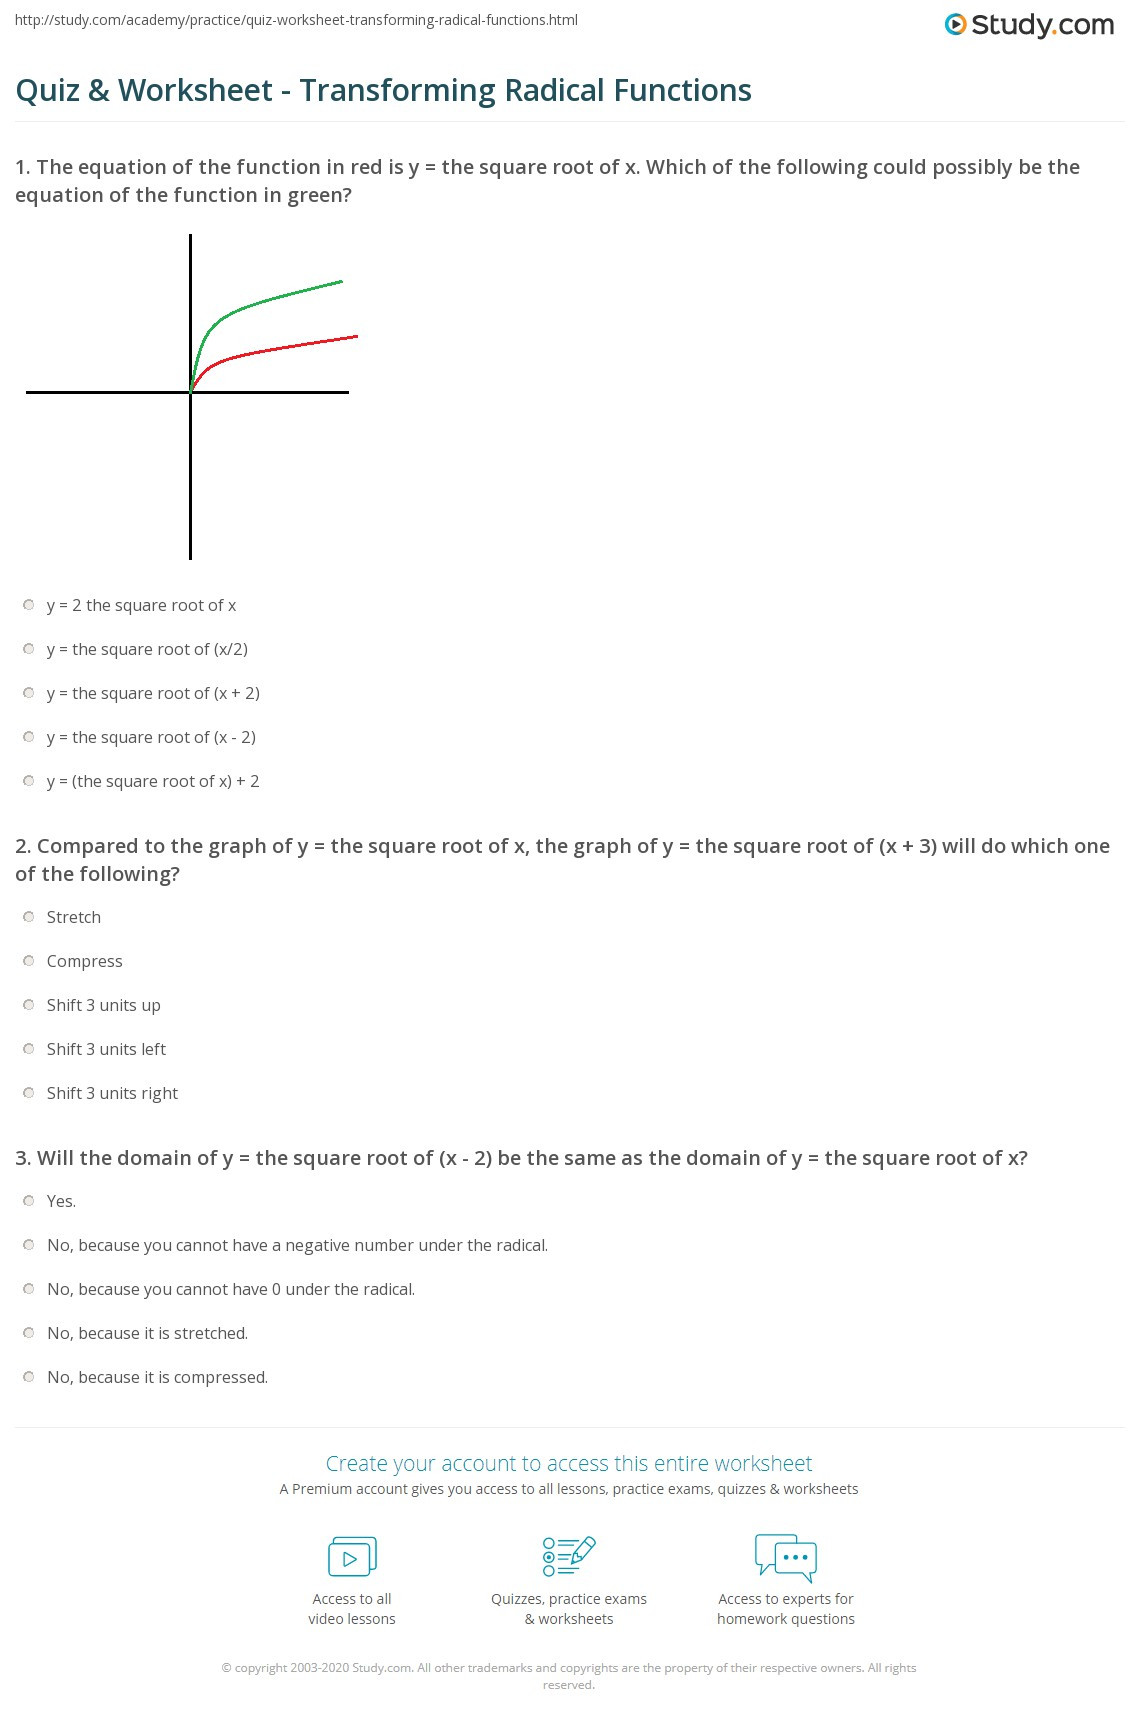 Graphing Inverse Functions Worksheet Quiz &amp; Worksheet Transforming Radical Functions